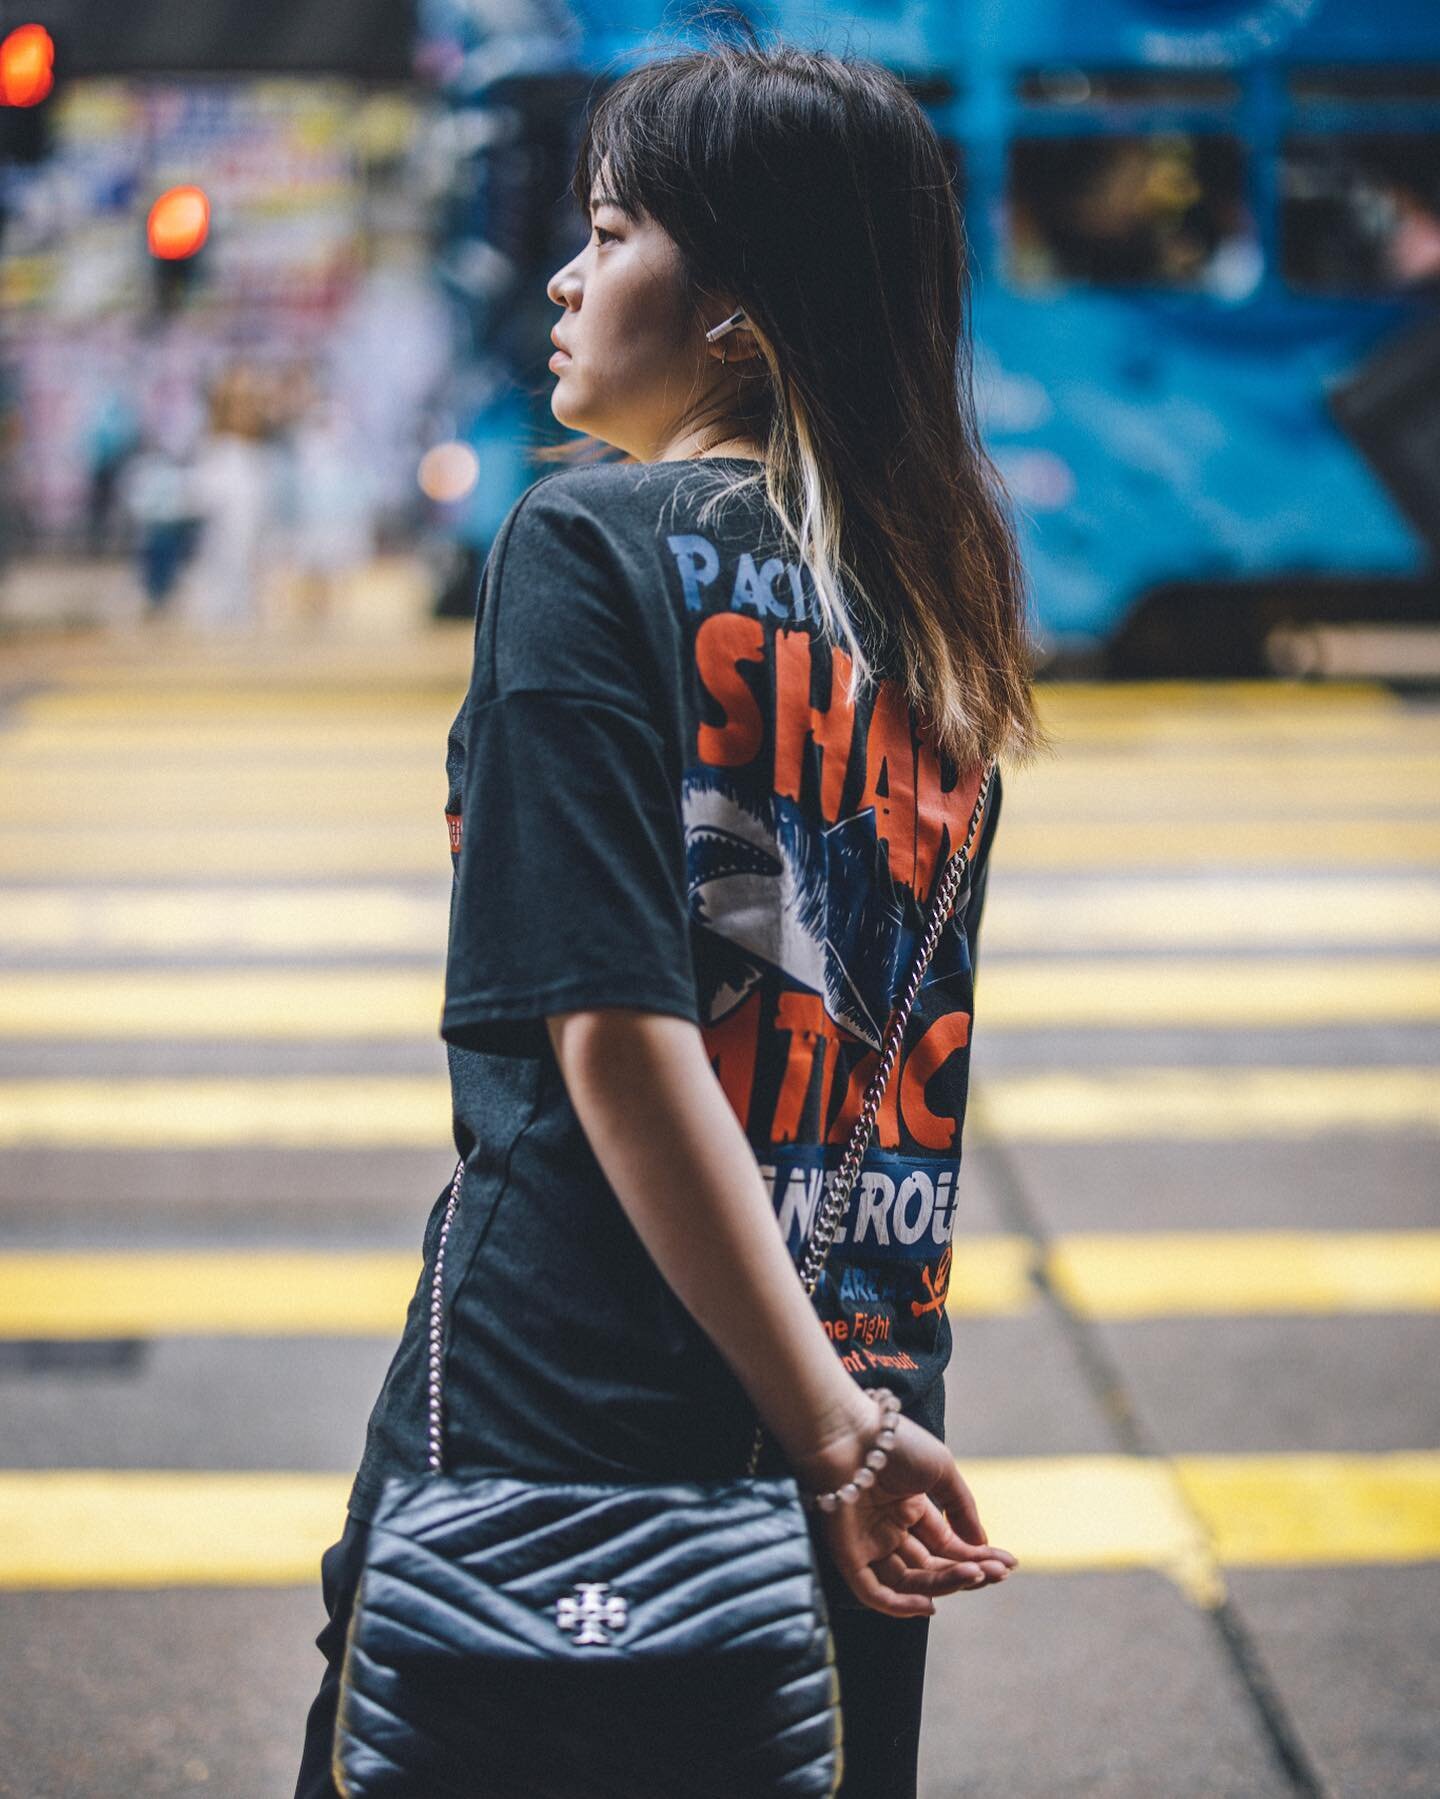 .
.
.
.
.
#streetphotographerscommunity #picsofhk
#streetdreamsmag #hongkonginsta 
#dreaminstreets #lensonstreets 
#streetsdiscovered #capturestreets
#streetphotography  #streetmobs 
#streetmagazine  #streetsofhongkong 
#streetartphotography #monster